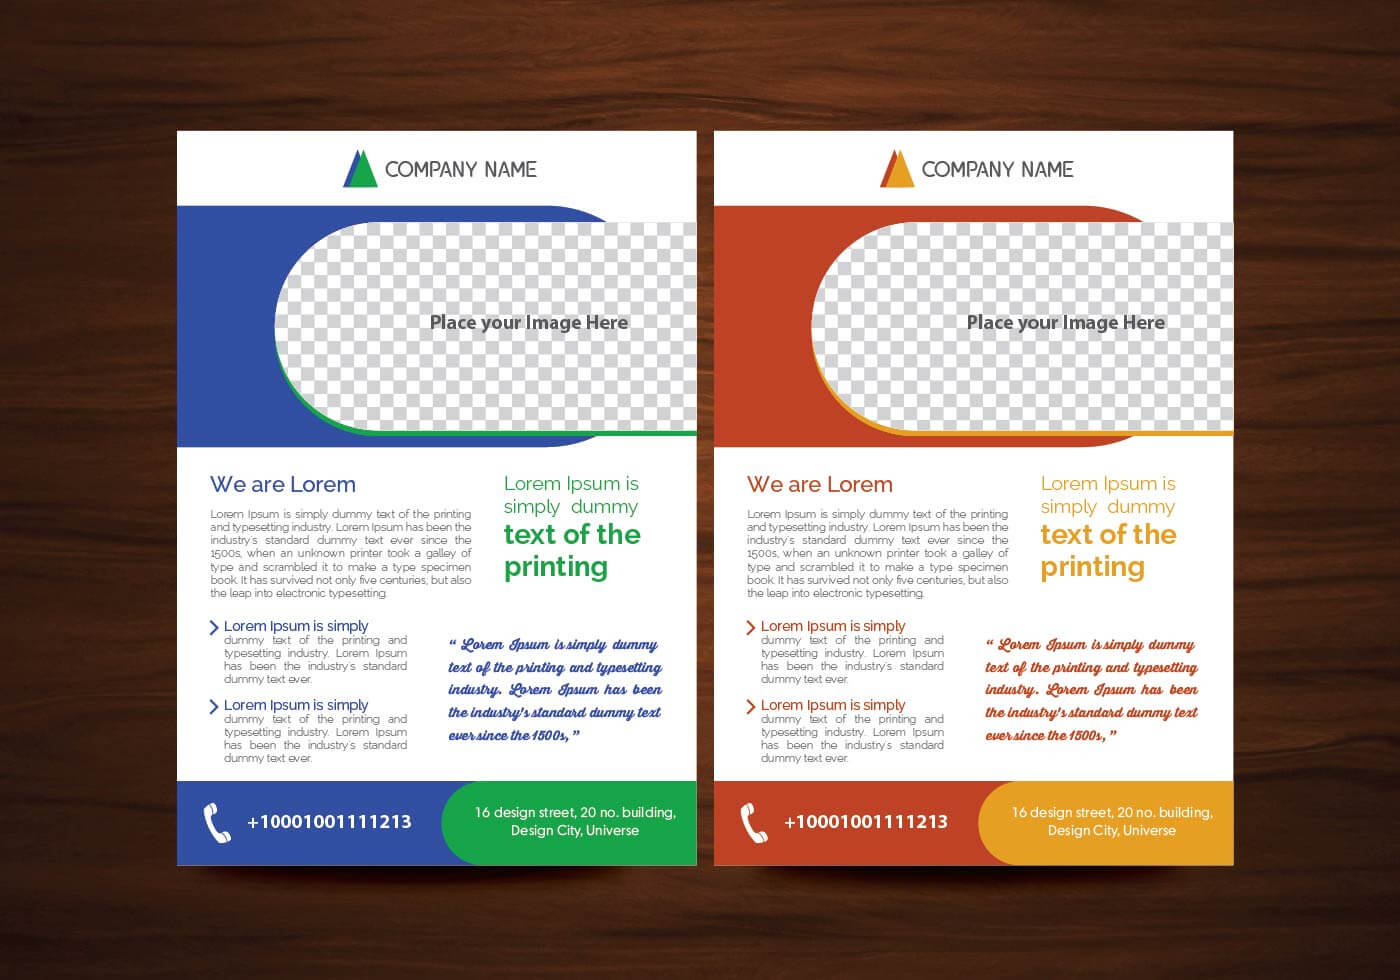 Vector Brochure Flyer Design Layout Template In A4 Size Regarding Letter Size Brochure Template